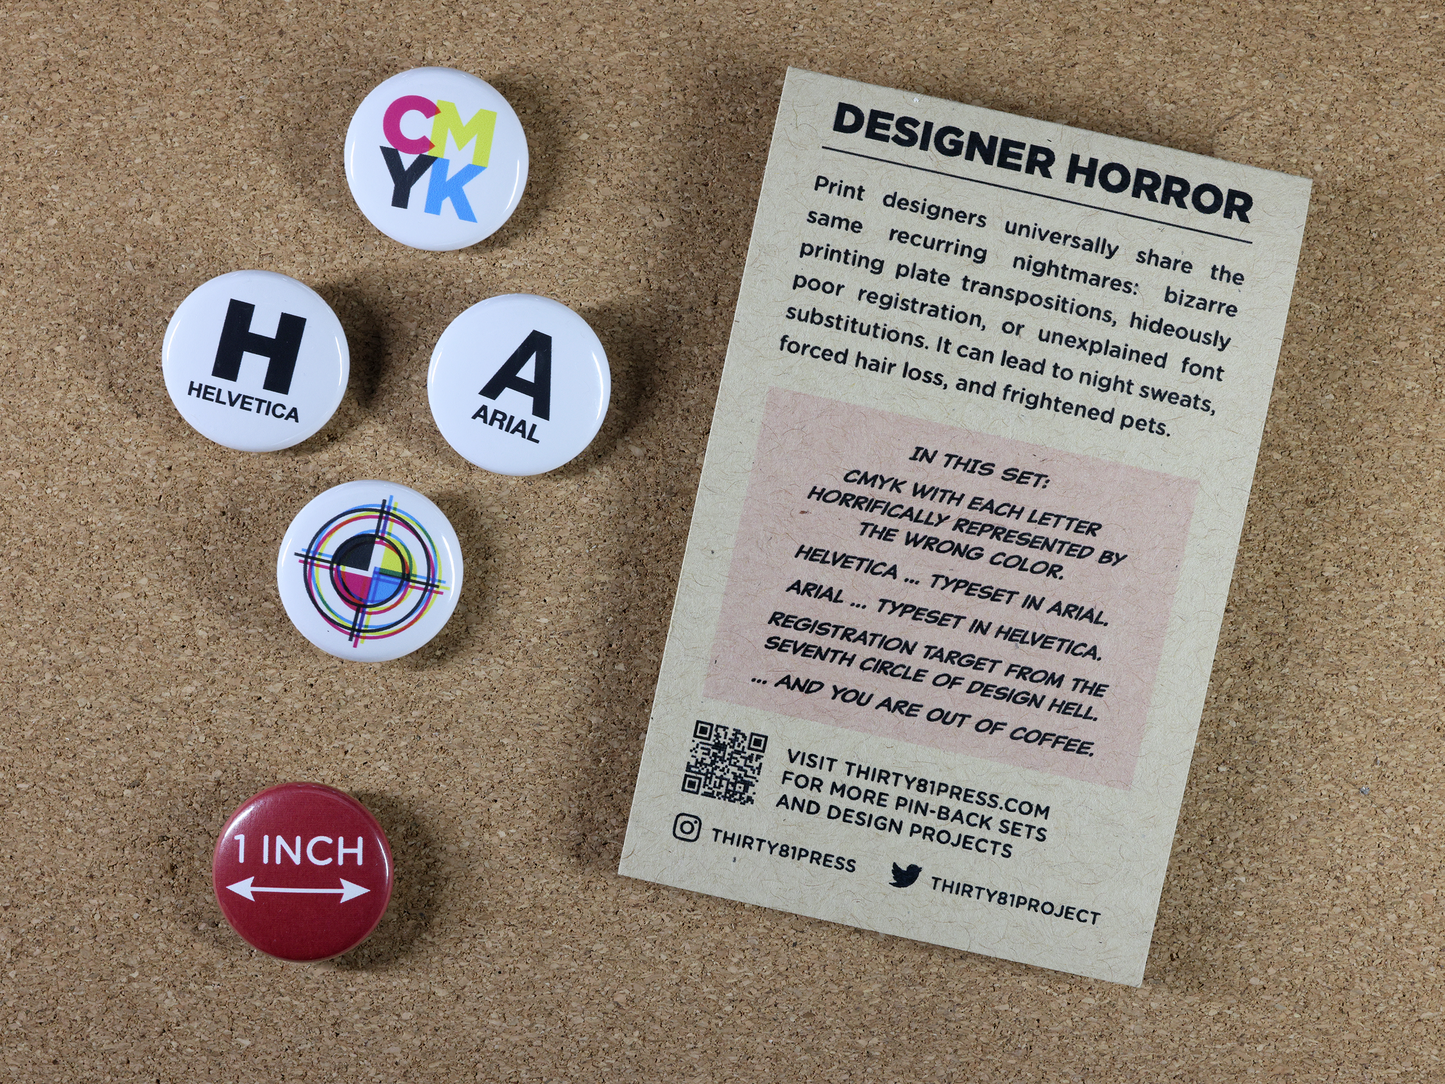 Design Horror Pin-Back Set